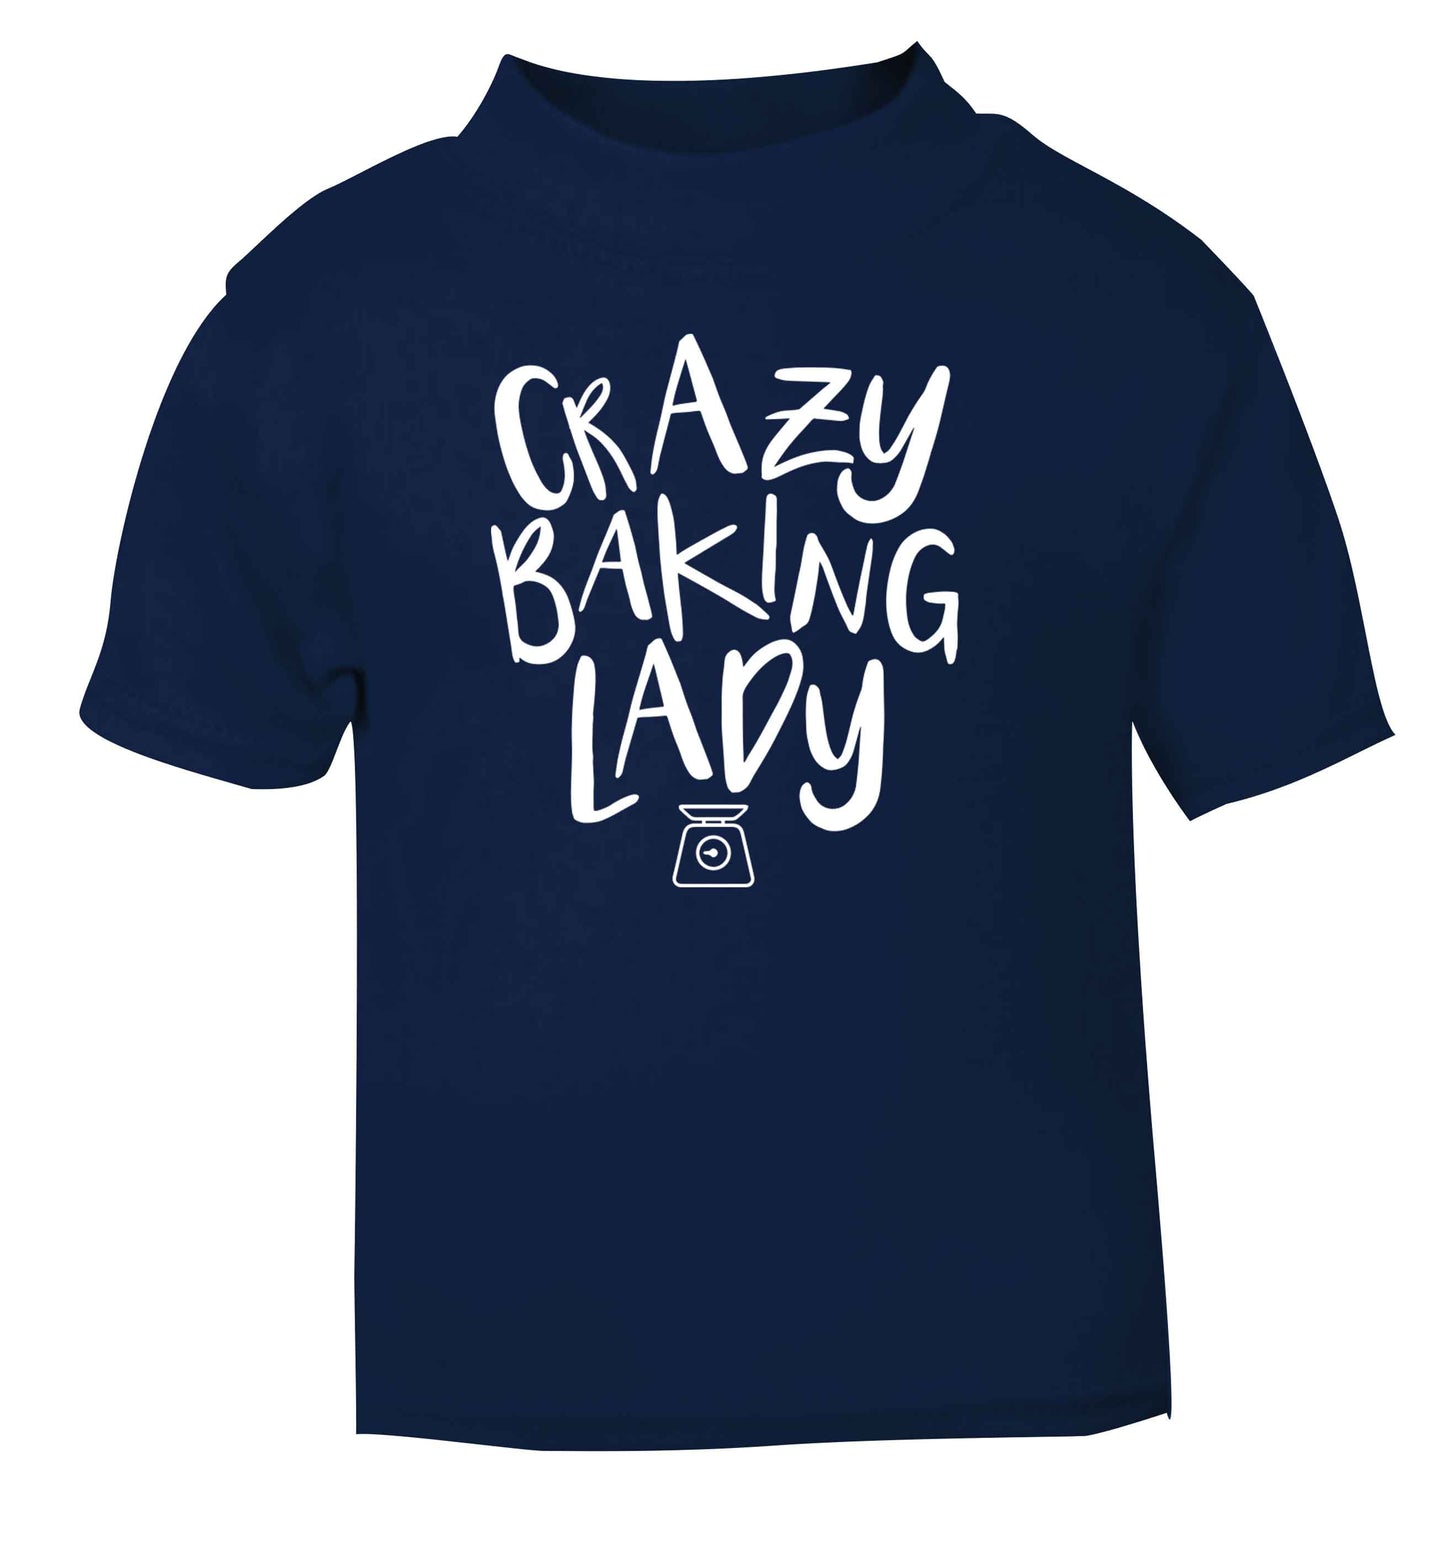 Crazy baking lady navy Baby Toddler Tshirt 2 Years